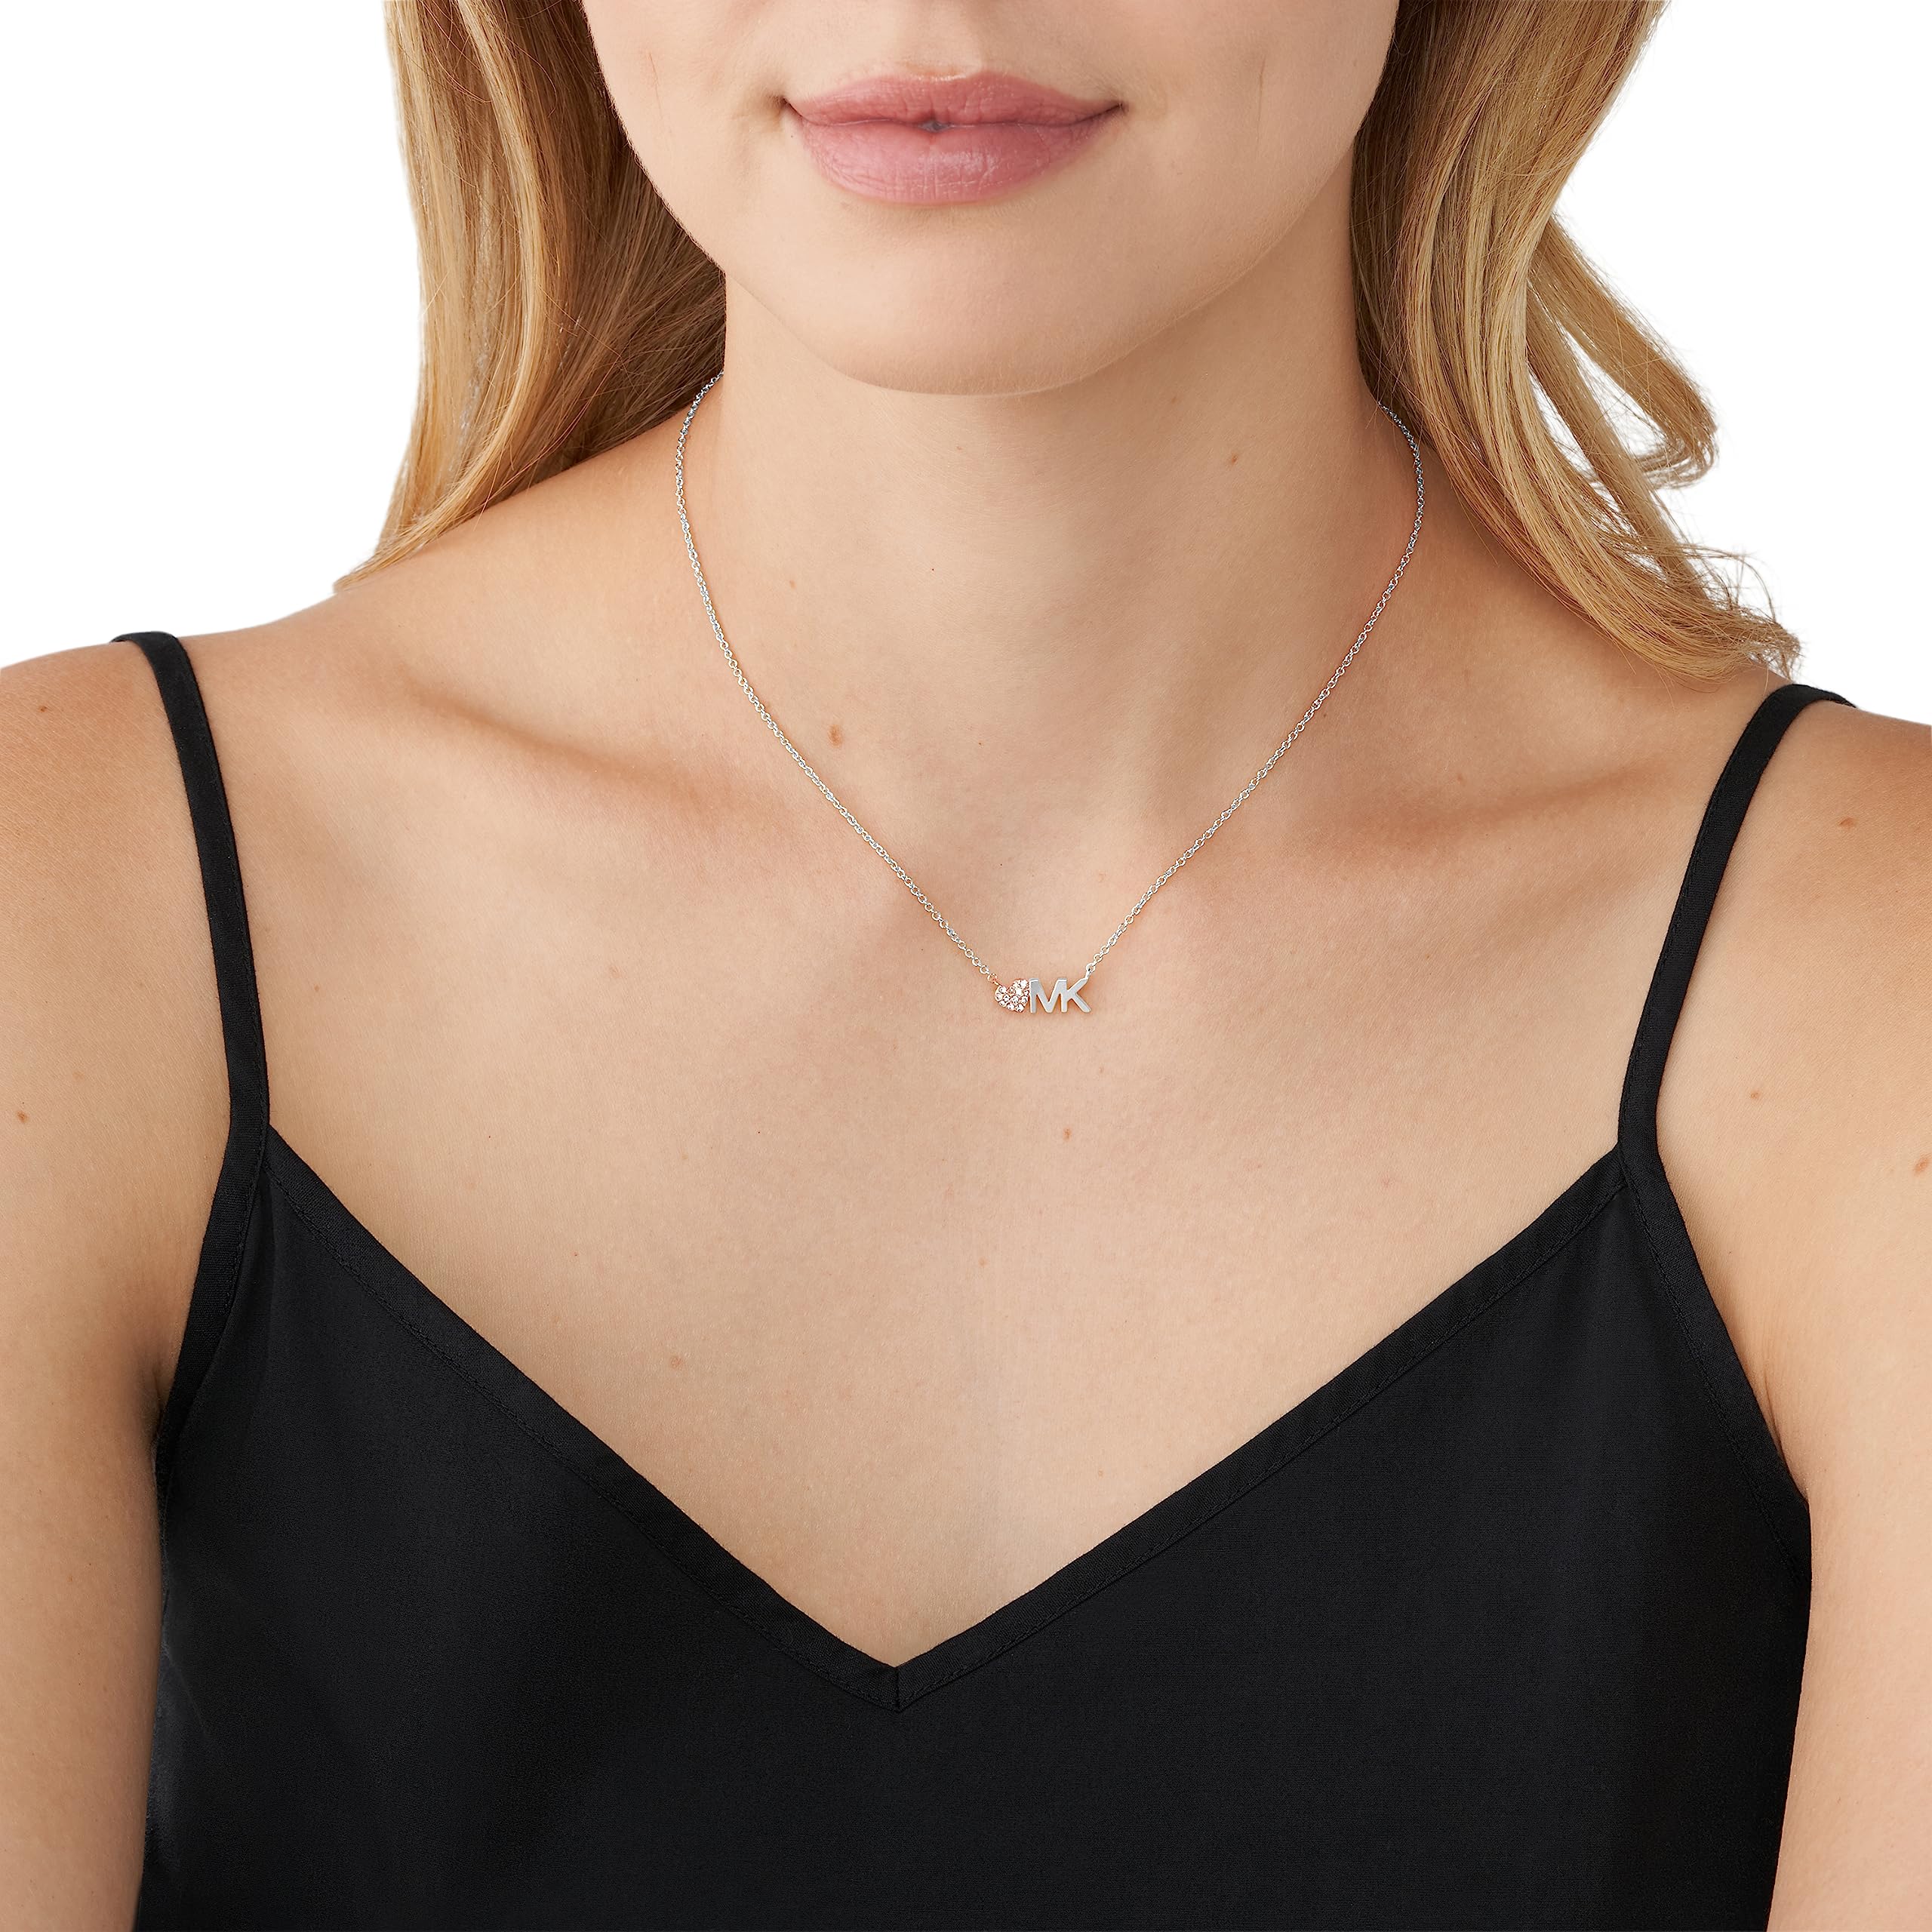 Michael Kors Women's MK Logo Two-Tone Brass Pendant Necklace (Model: MKJ7977931)